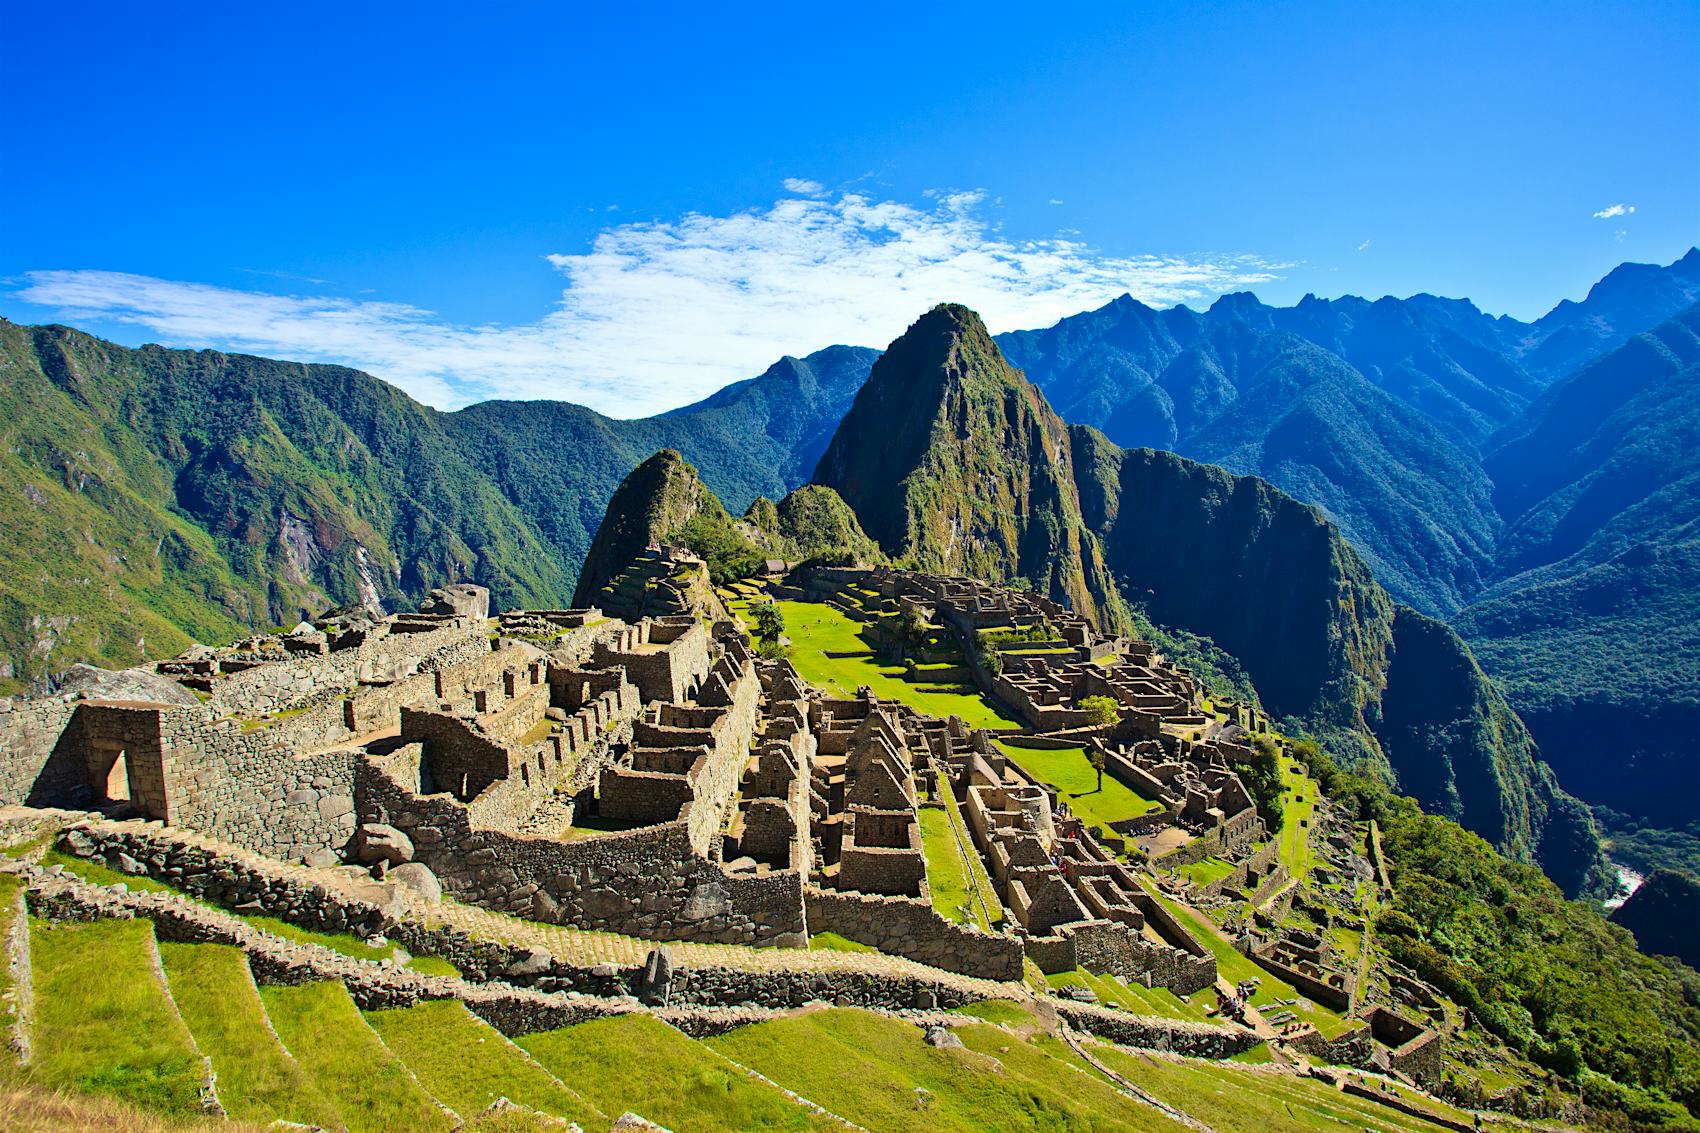 ''Machu Picchu is a 15th century Inca site located 2,430 metres above sea level on a mountain ridge above the Urubamba Valley. Machu Picchu was declared a Peruvian Historical Sanctuary.''